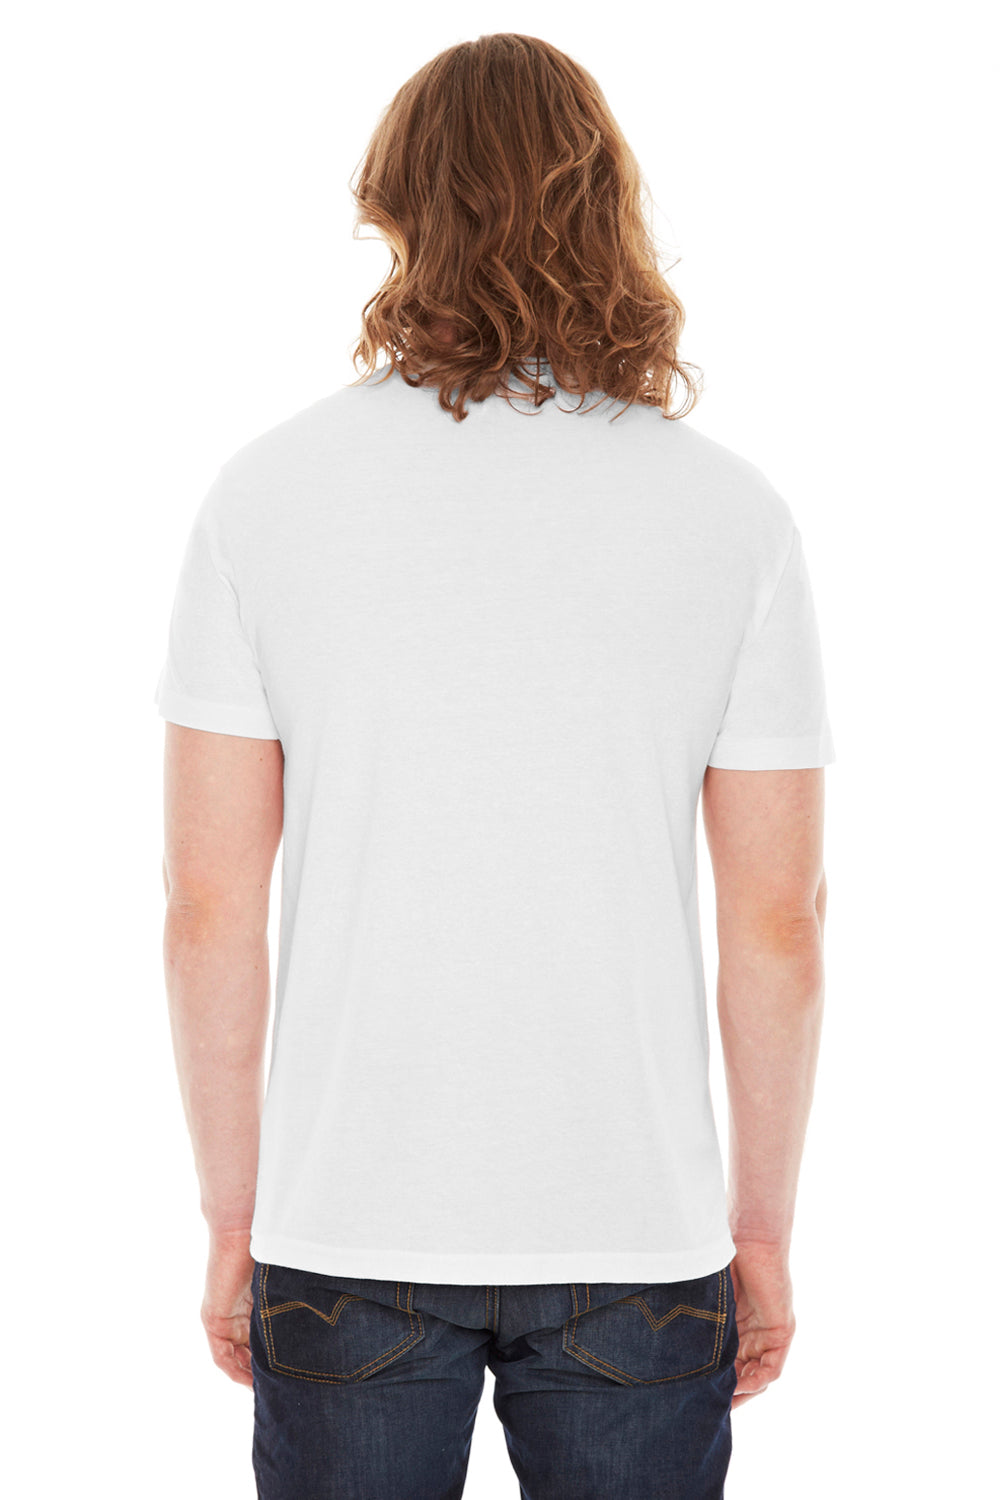 American Apparel BB401 Mens USA Made Short Sleeve Crewneck T-Shirt White Back